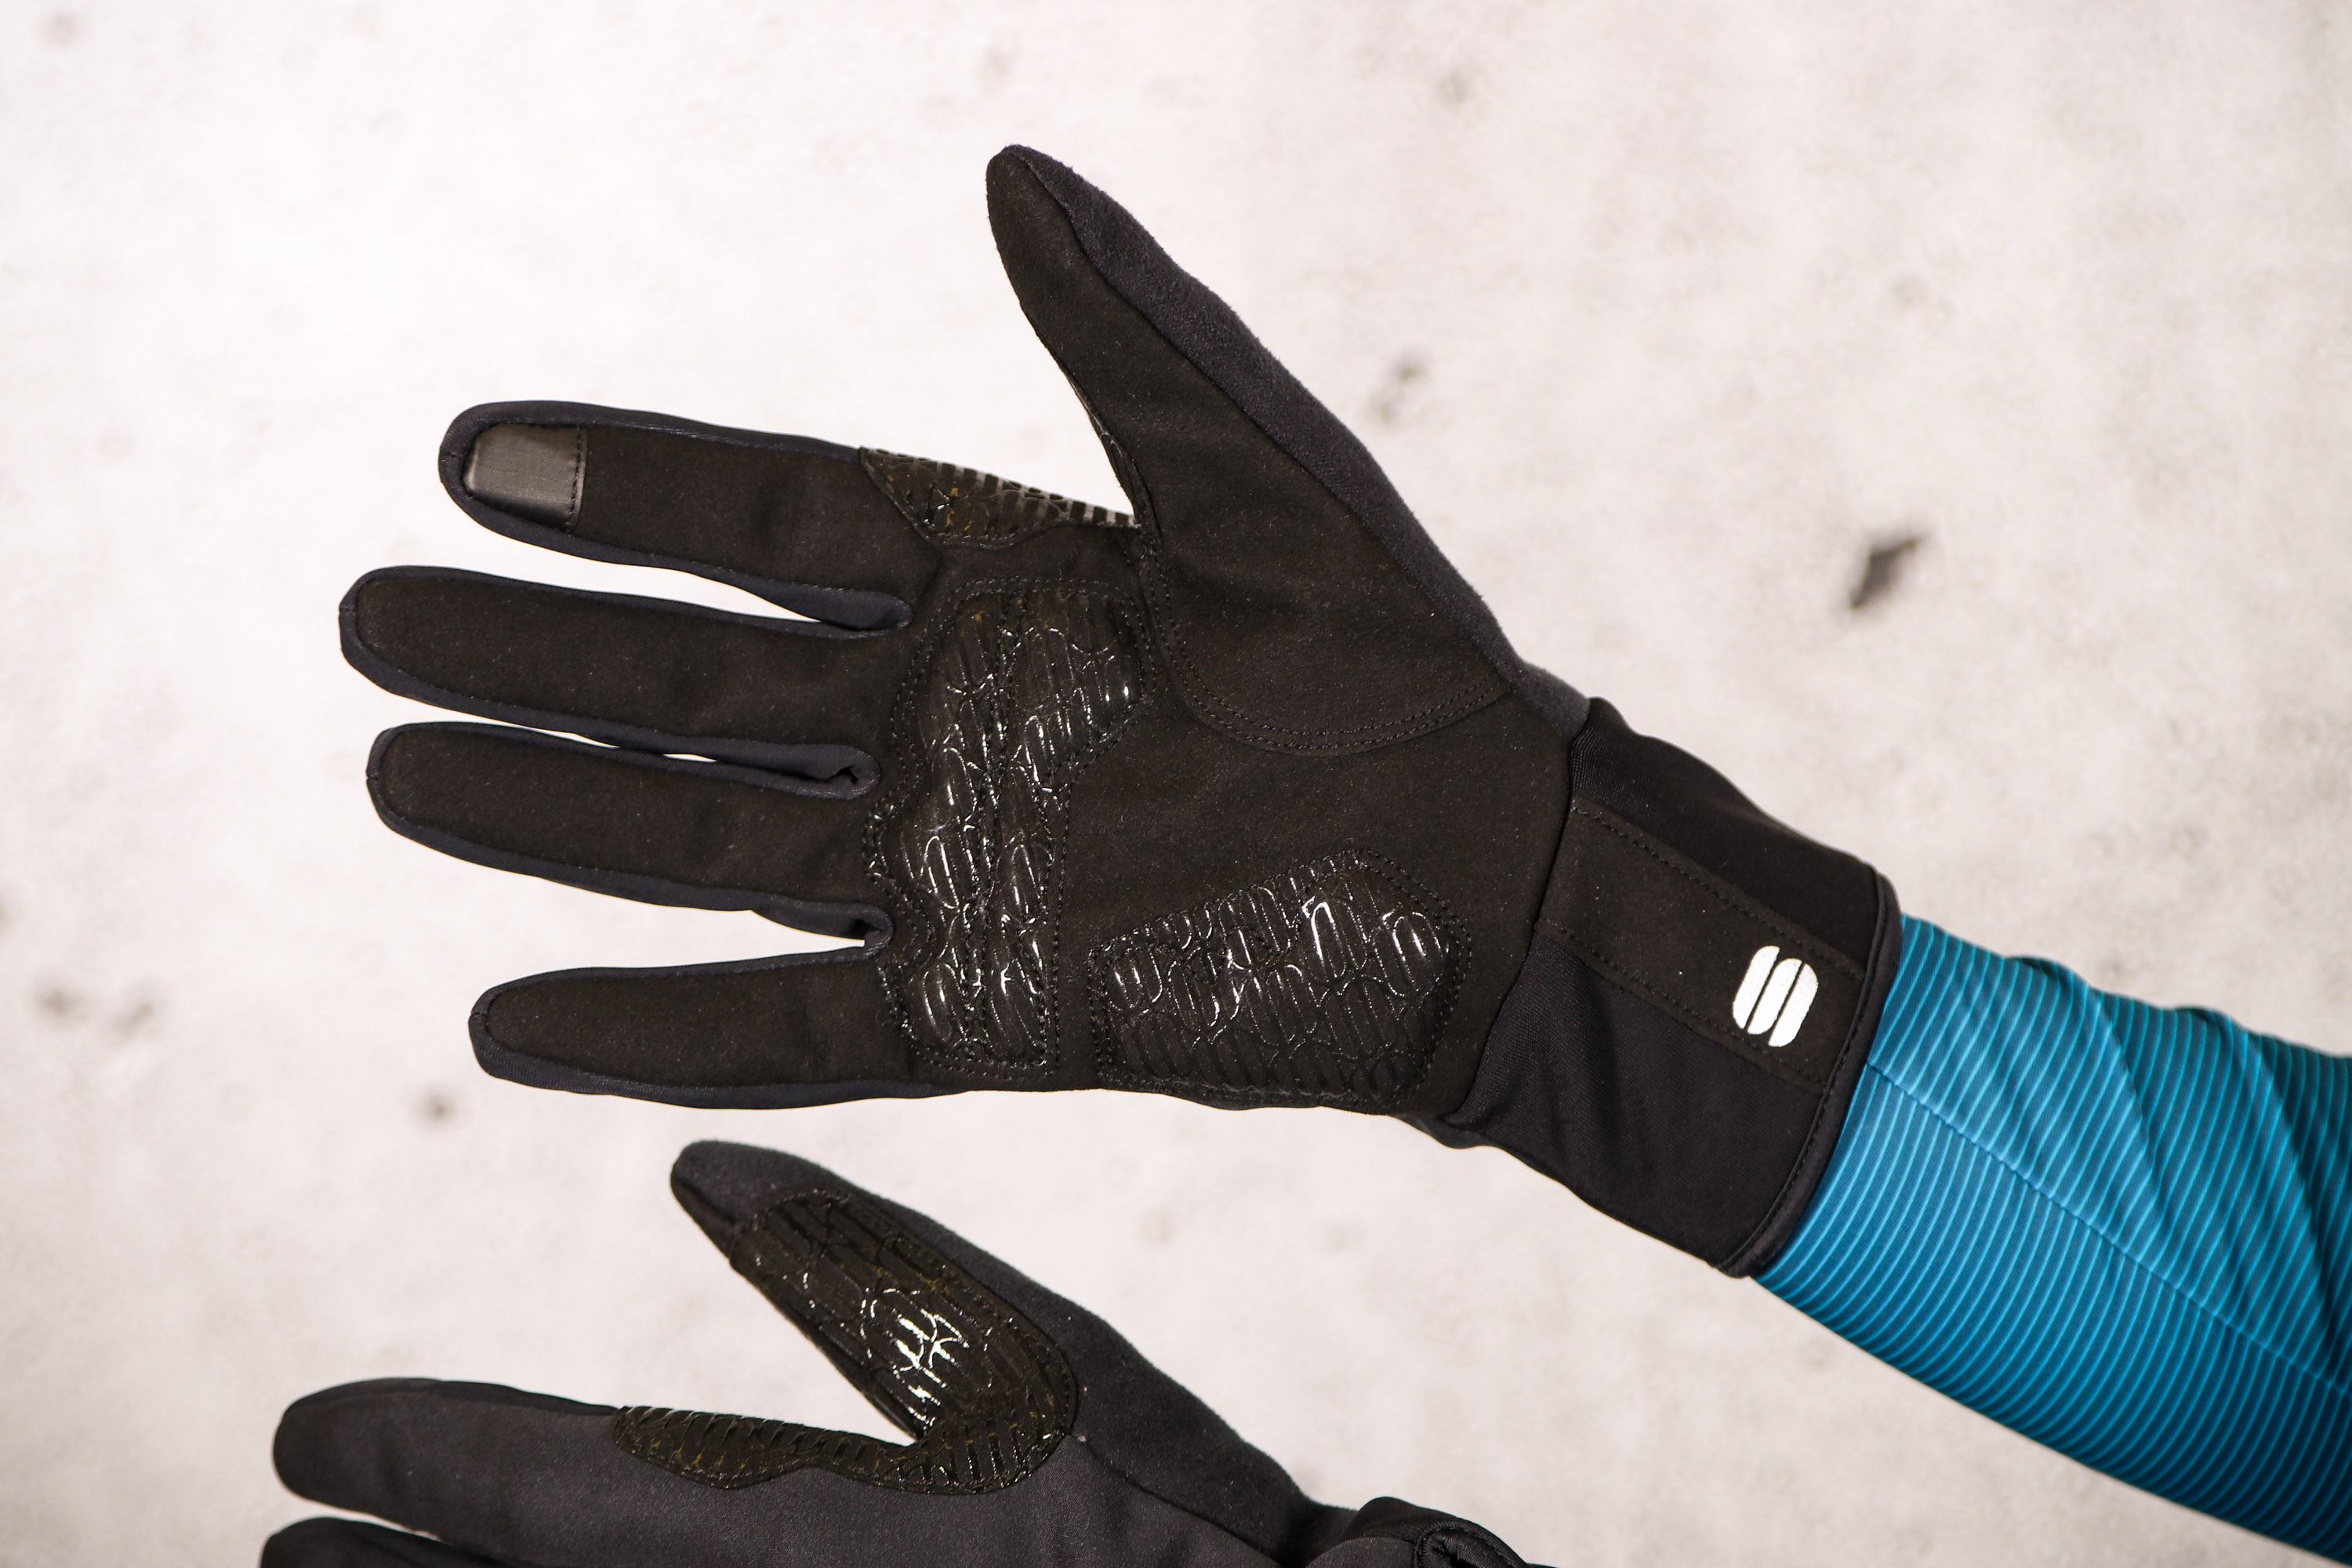 Hot Hand Warmers  Lot Of 8 Pairs  Bonus Free Fleece Gloves 